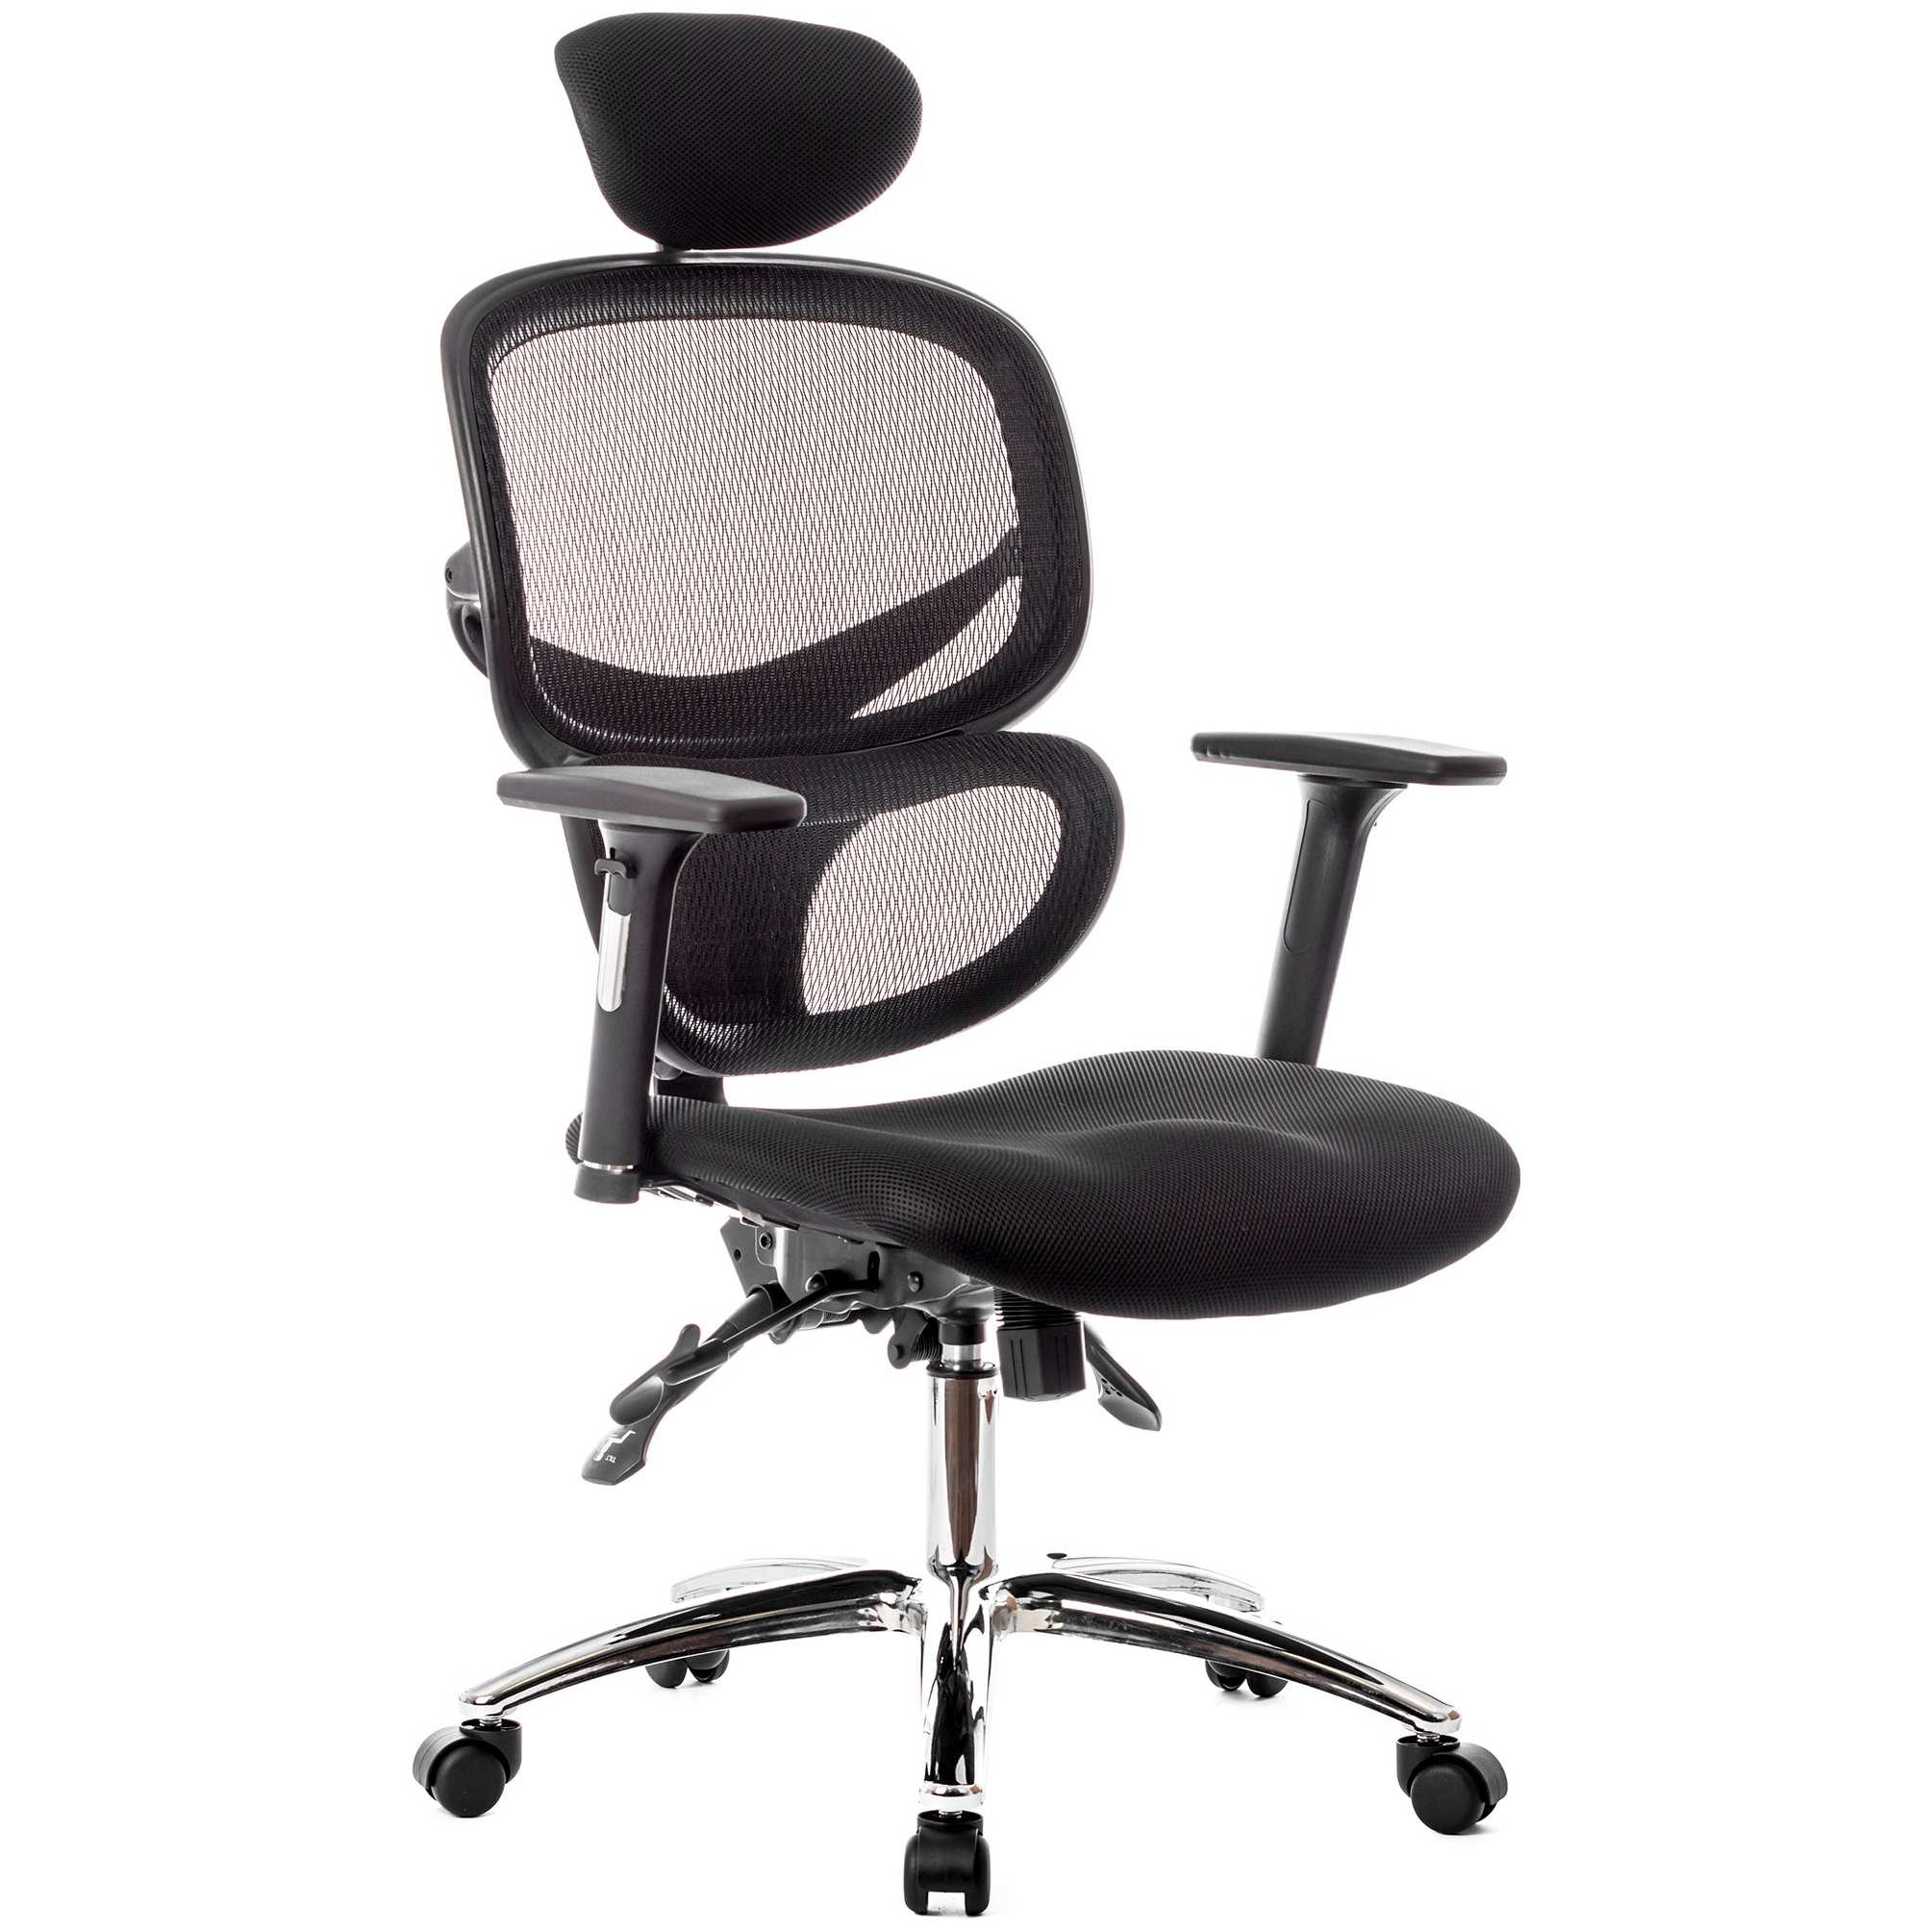 Desire Ergonomic Mesh Office Chair With, Desire Ergonomic Mesh Office Chair With Headrest